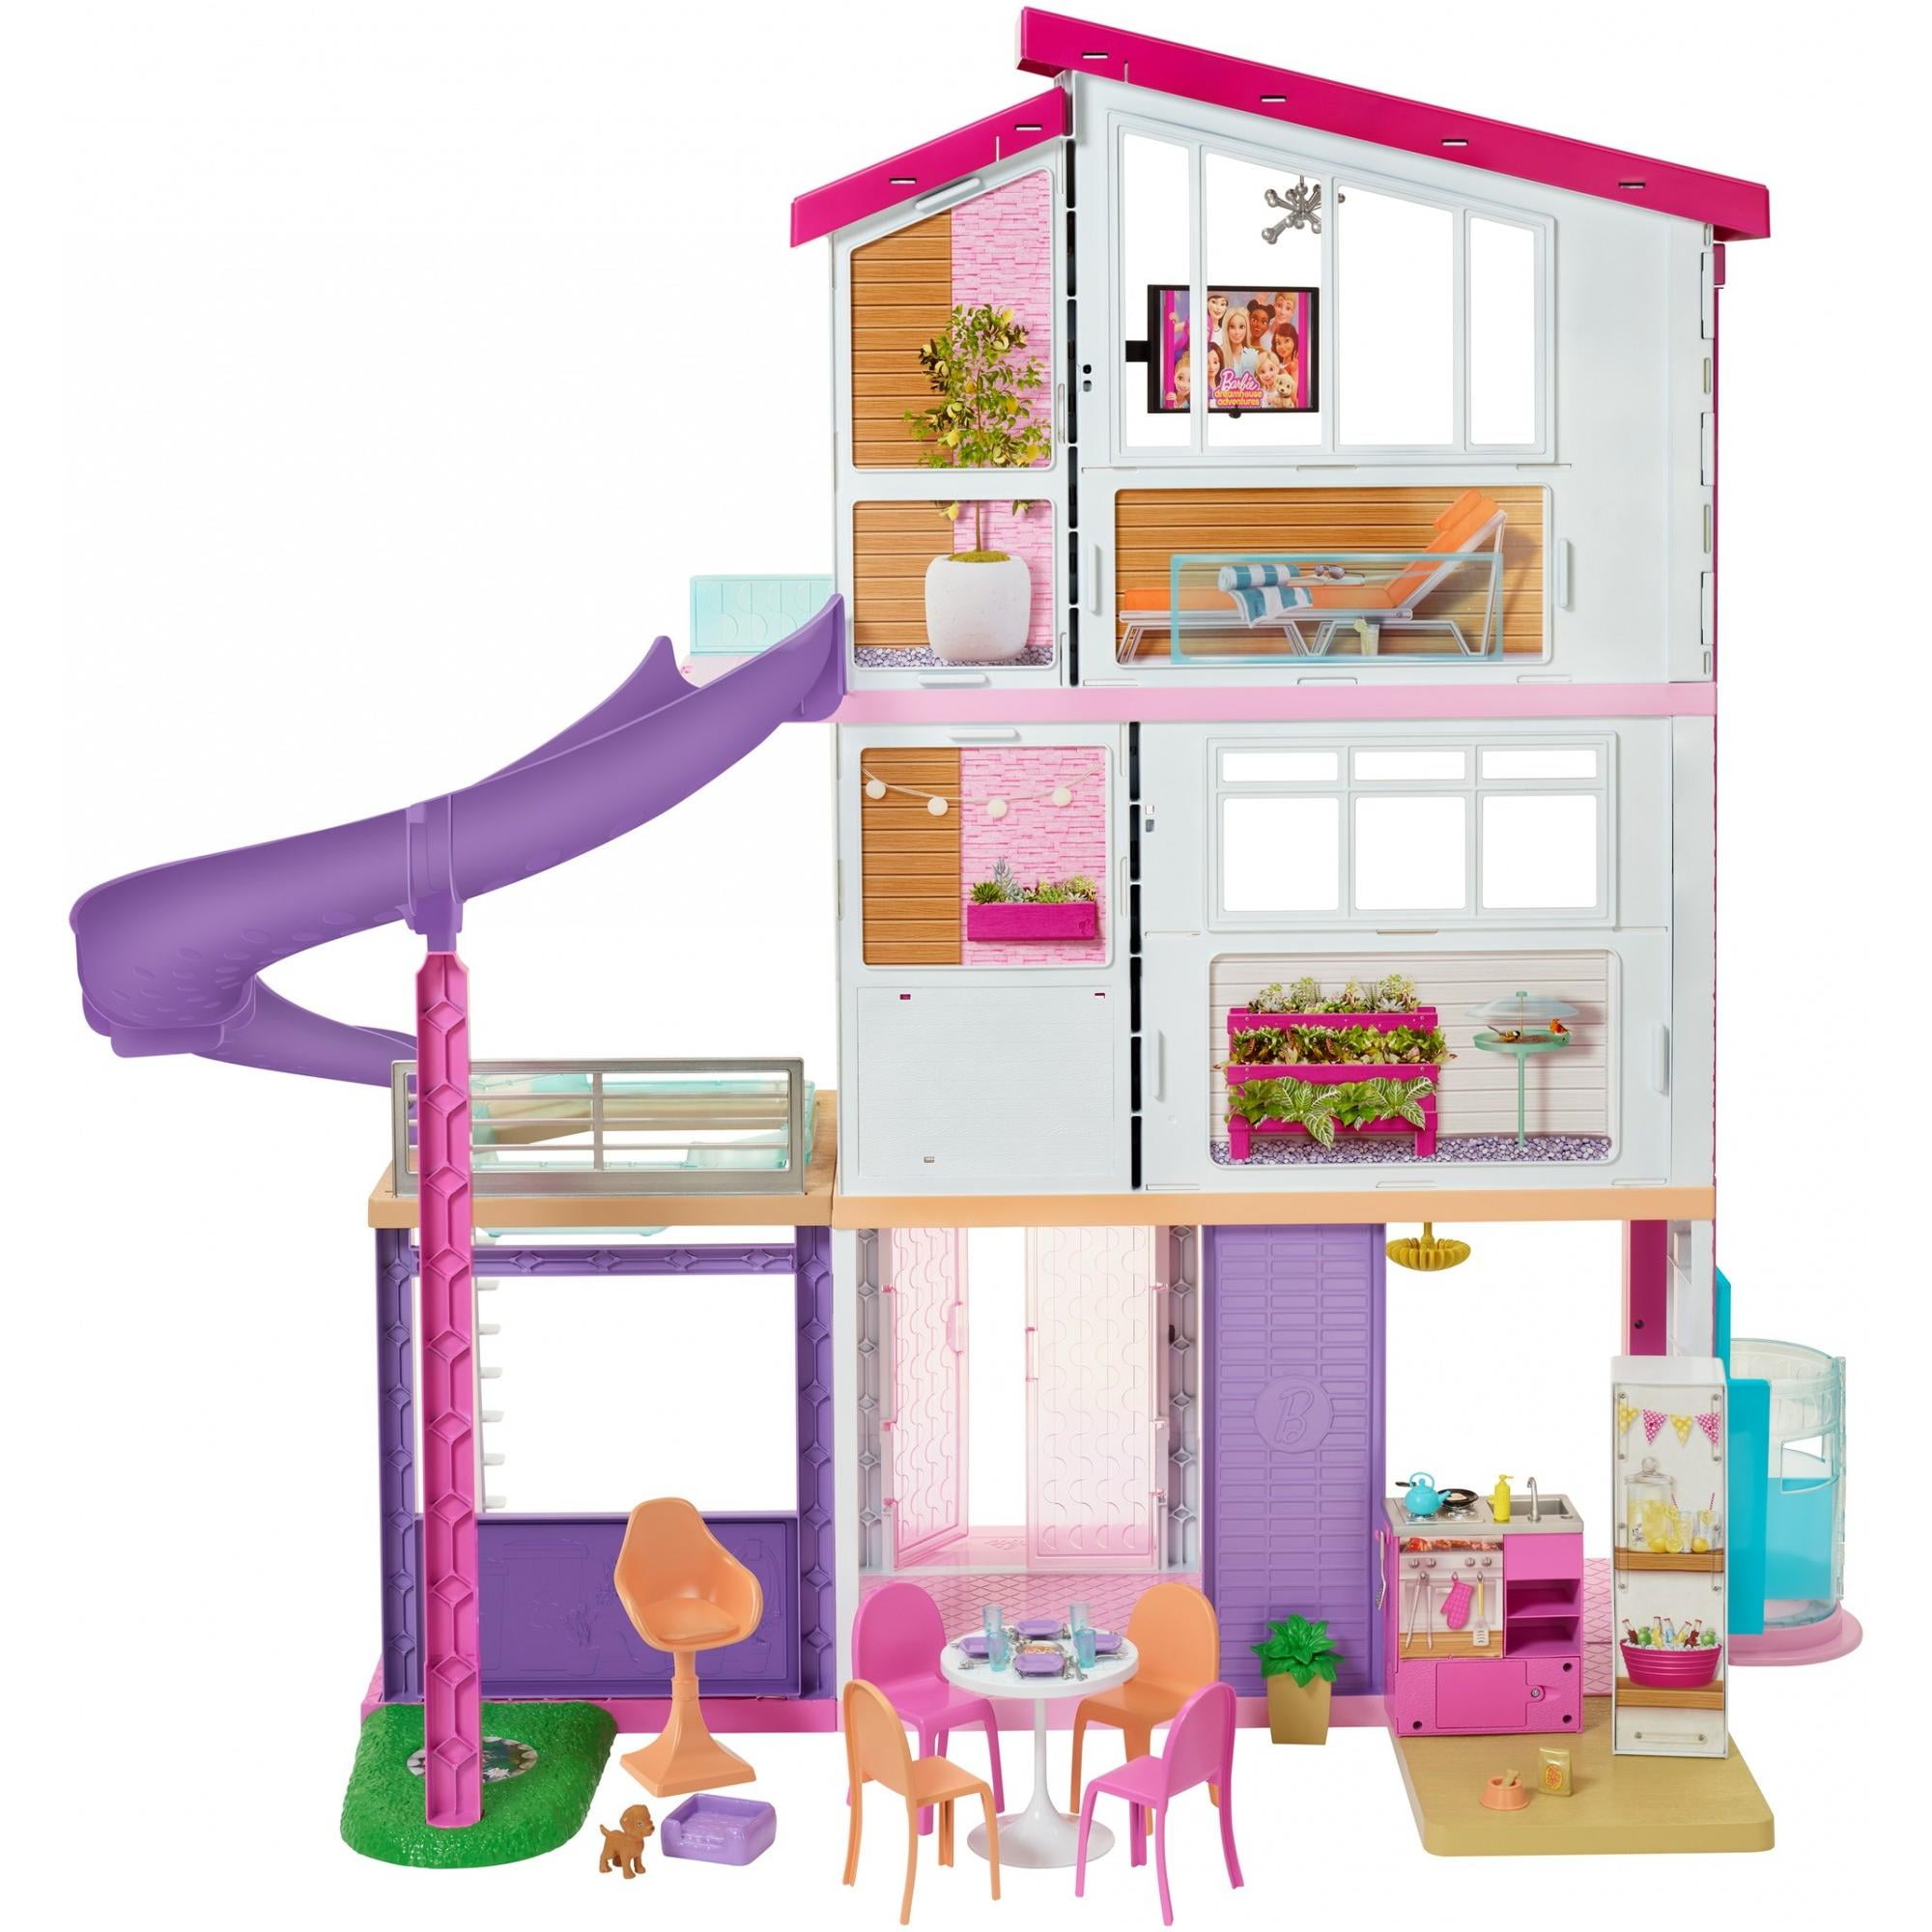 Лучший дом барби. Дом для куклы Barbie дом мечты fhy73. Домик для кукол Барби Дрим Хаус. Mattel Barbie fhy73 Барби "дом мечты". Дом для куклы Barbie дом мечты fhy73 кобэки.